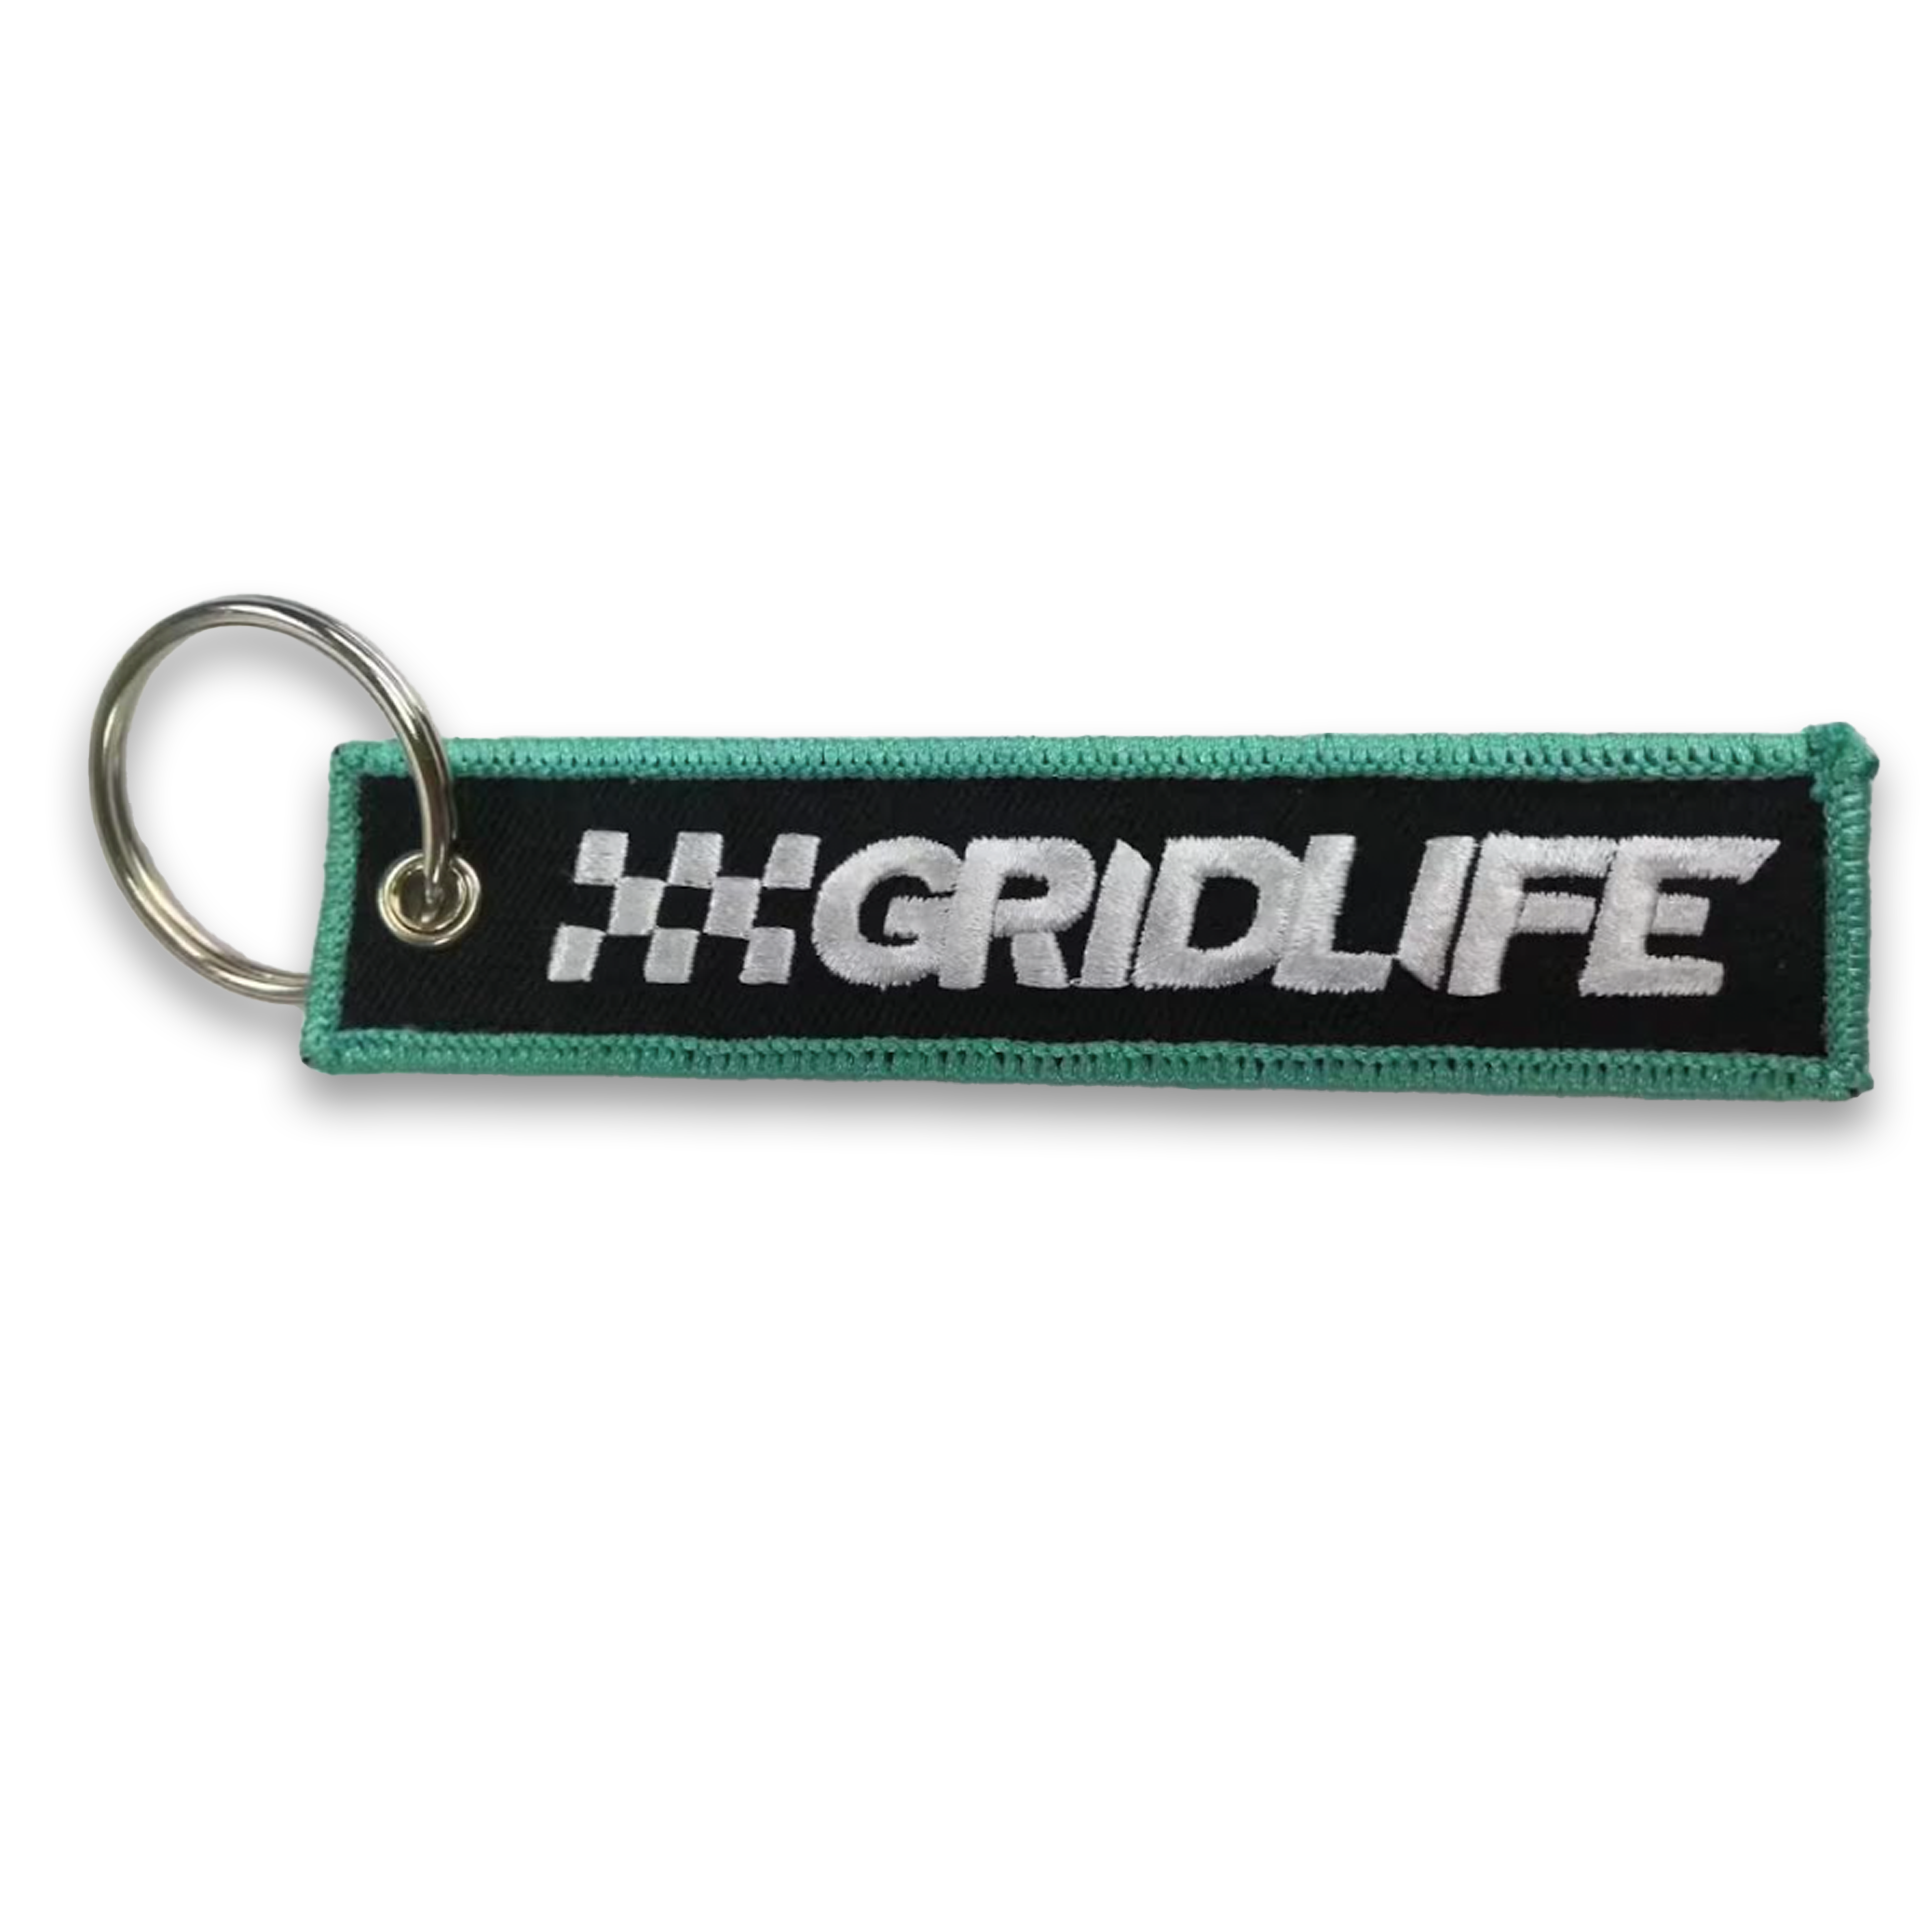 GRIDLIFE flag logo jet tag keychain 